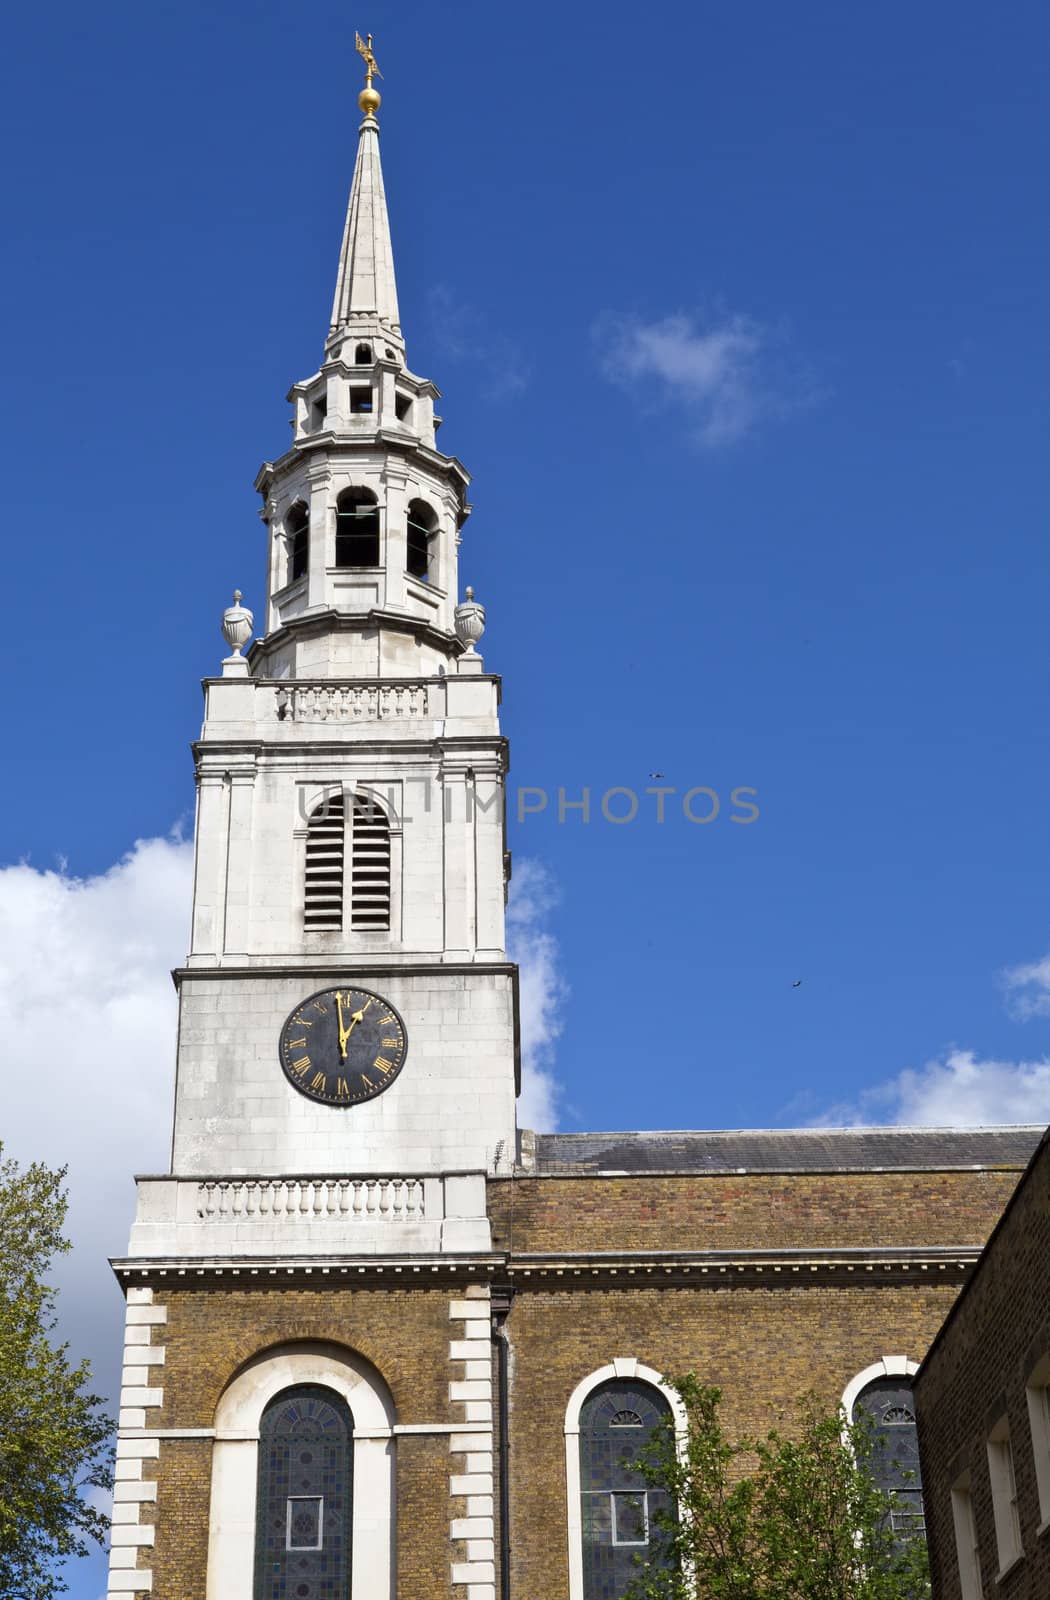 St. James's Church in Clerkenwell, London by chrisdorney